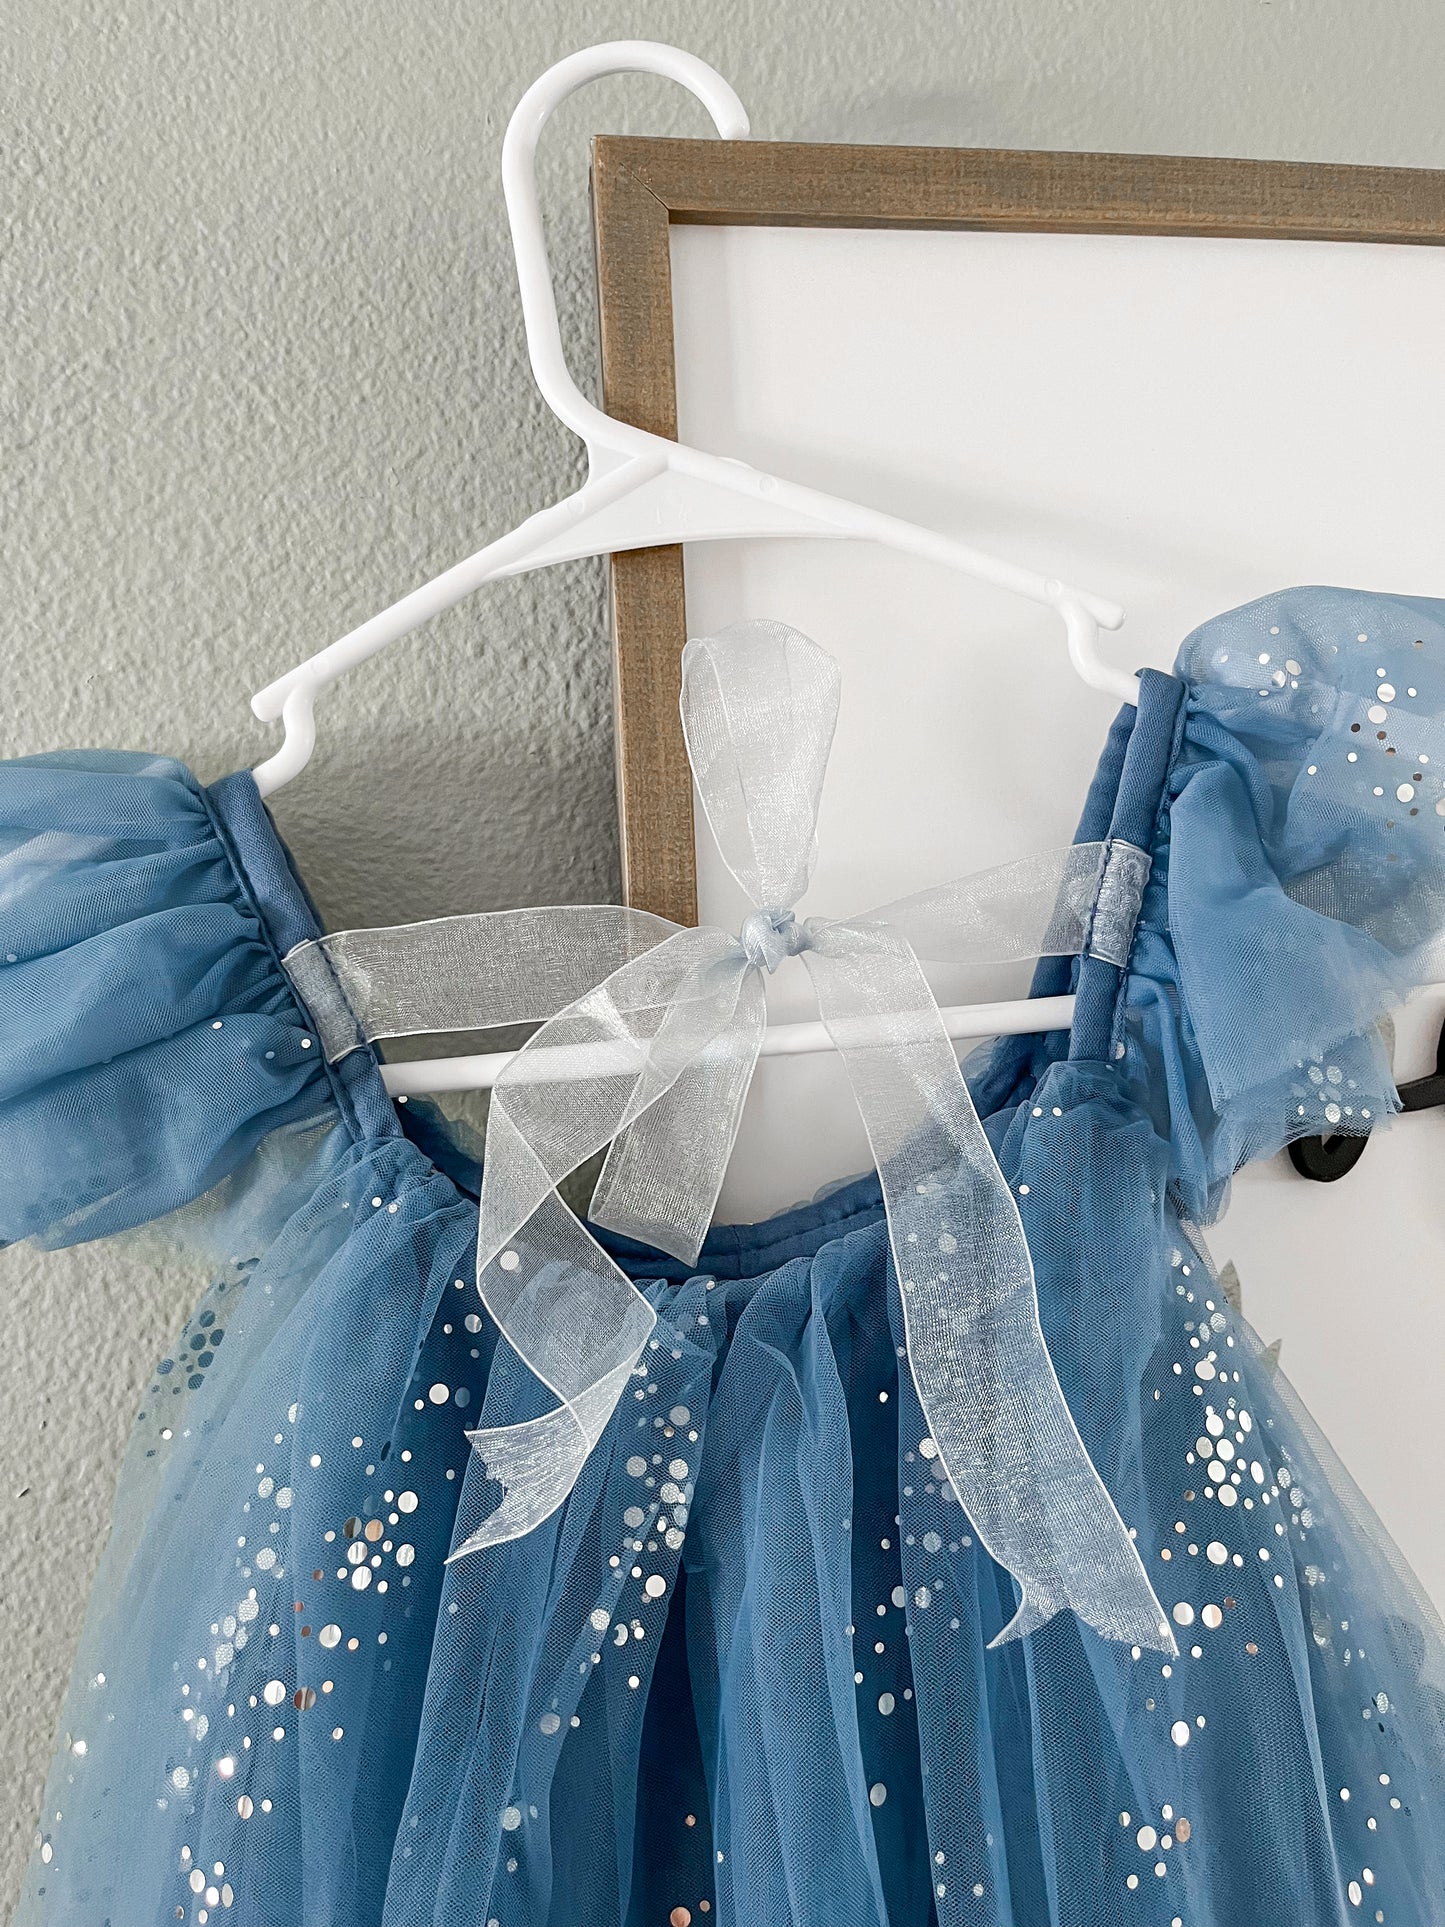 “THE” Blue Princess Dress